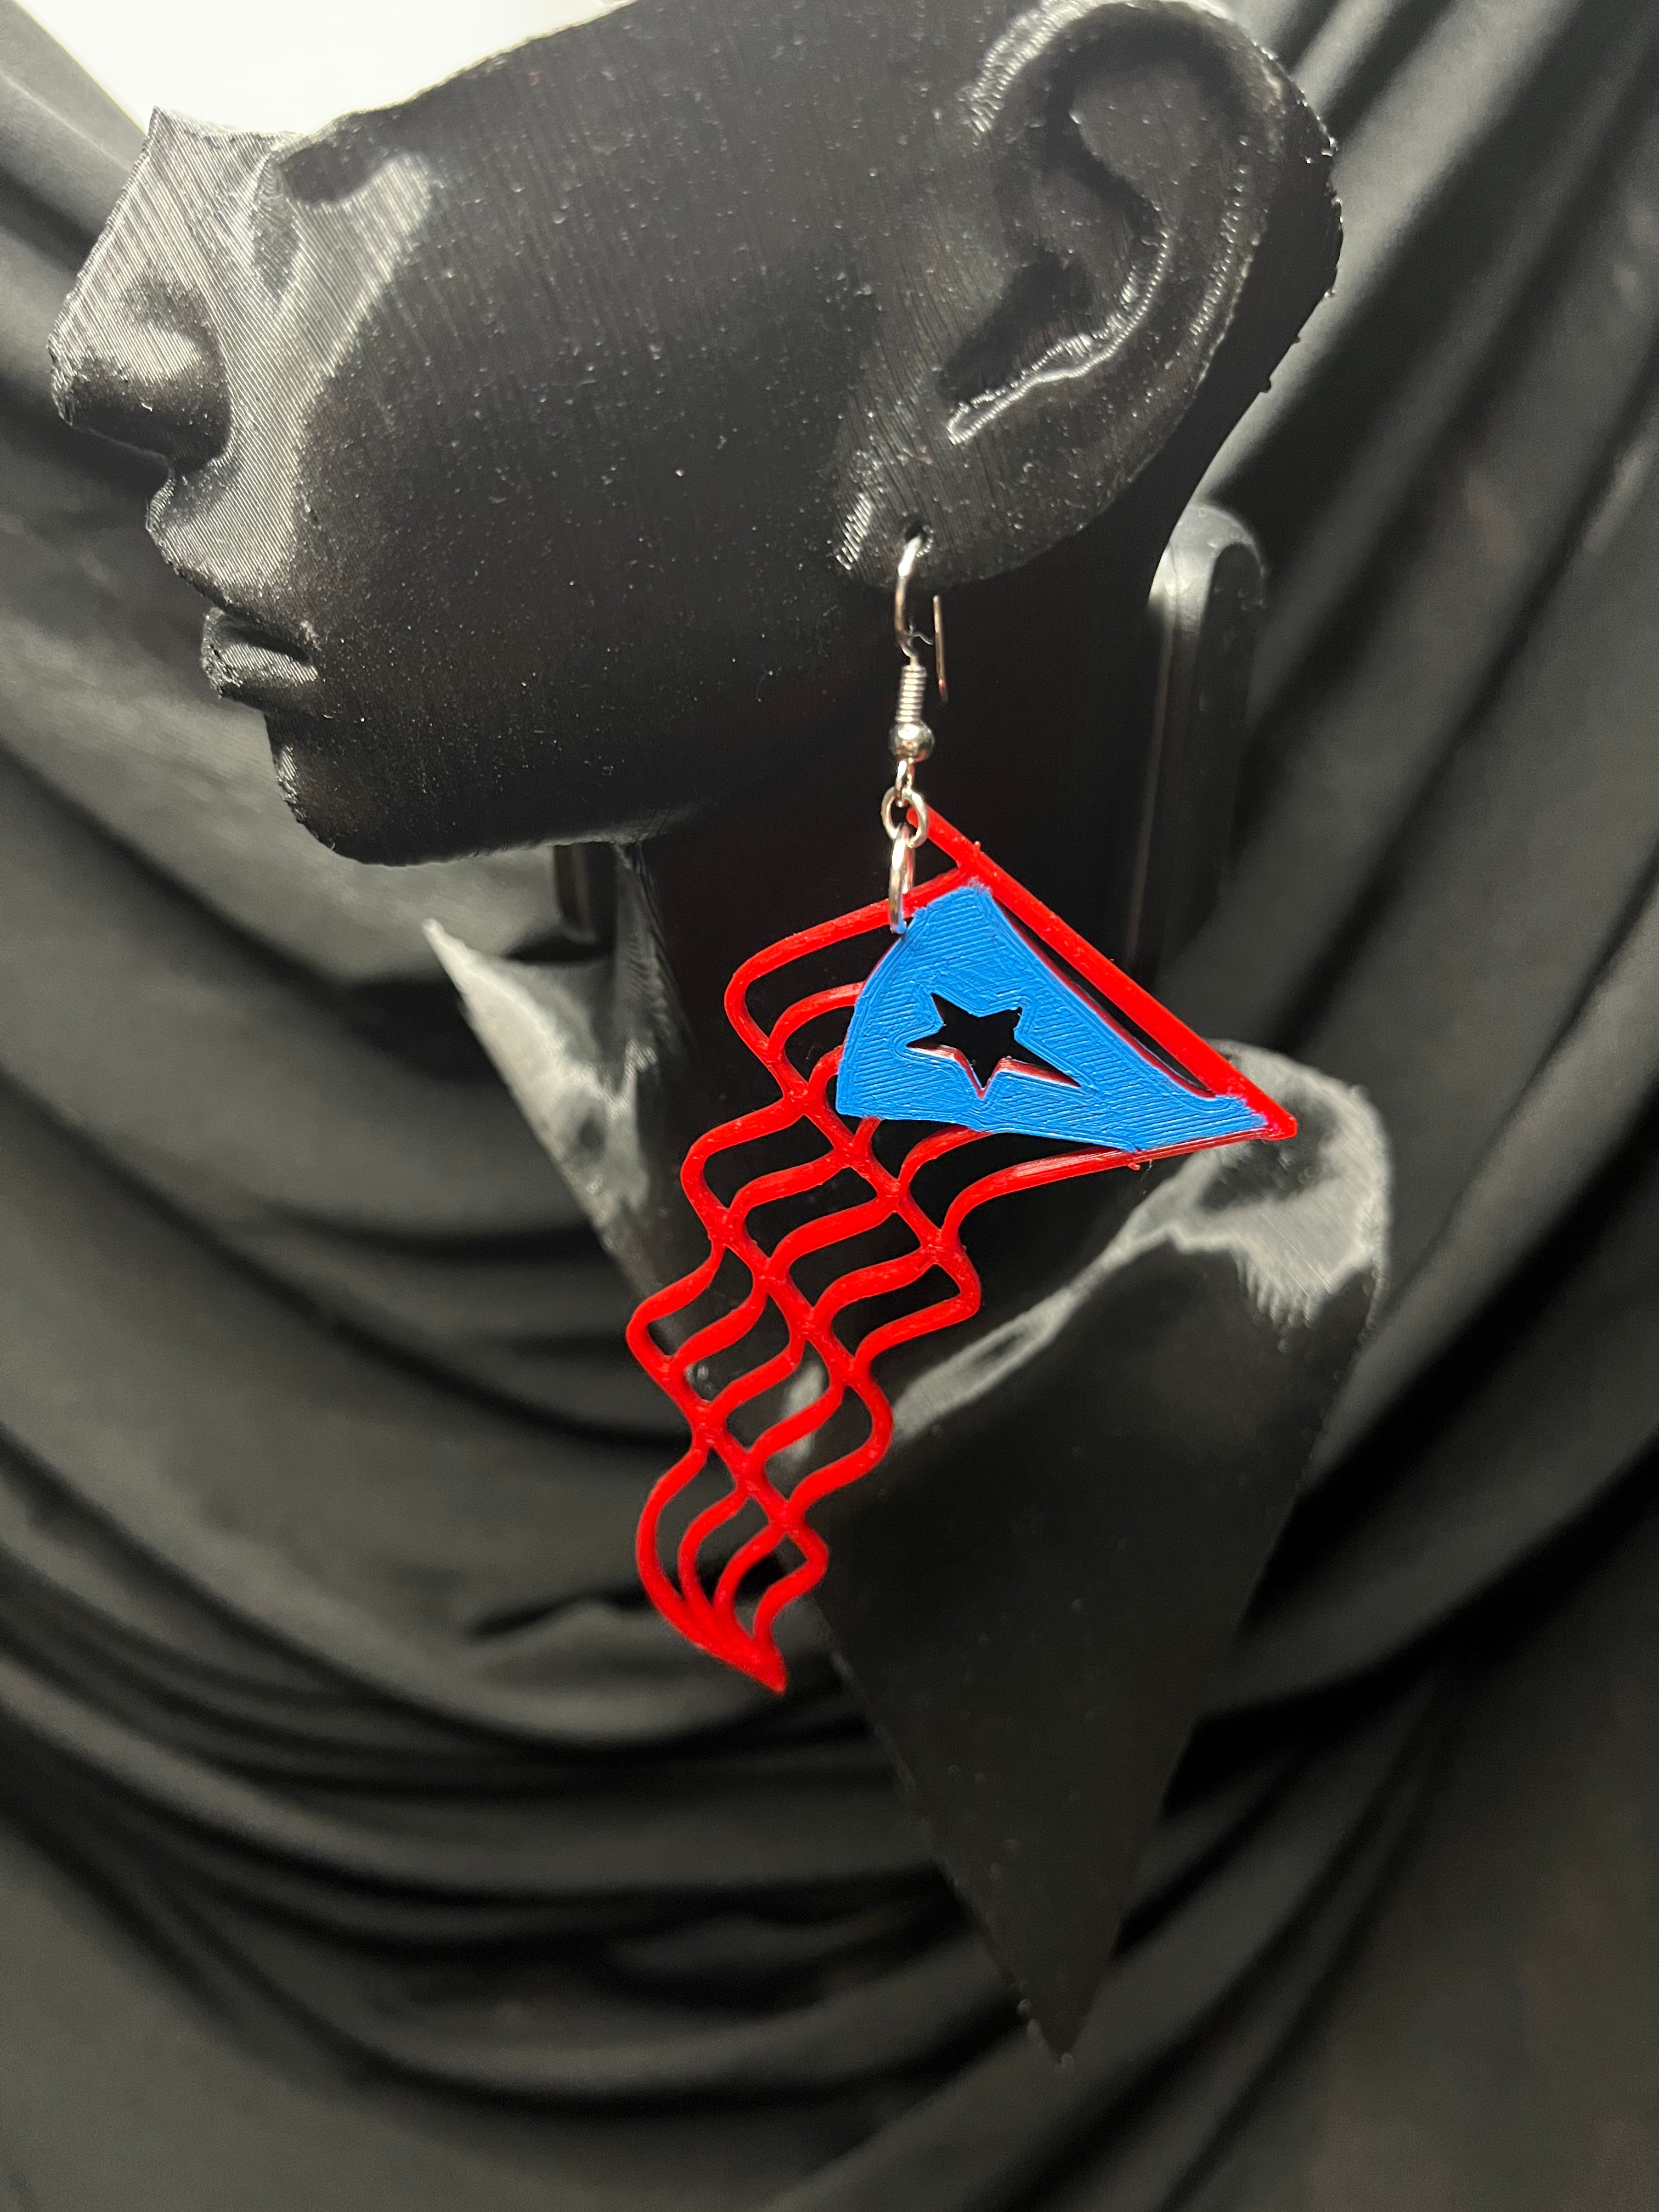 Paseo Boricua Chicago Flag earrings